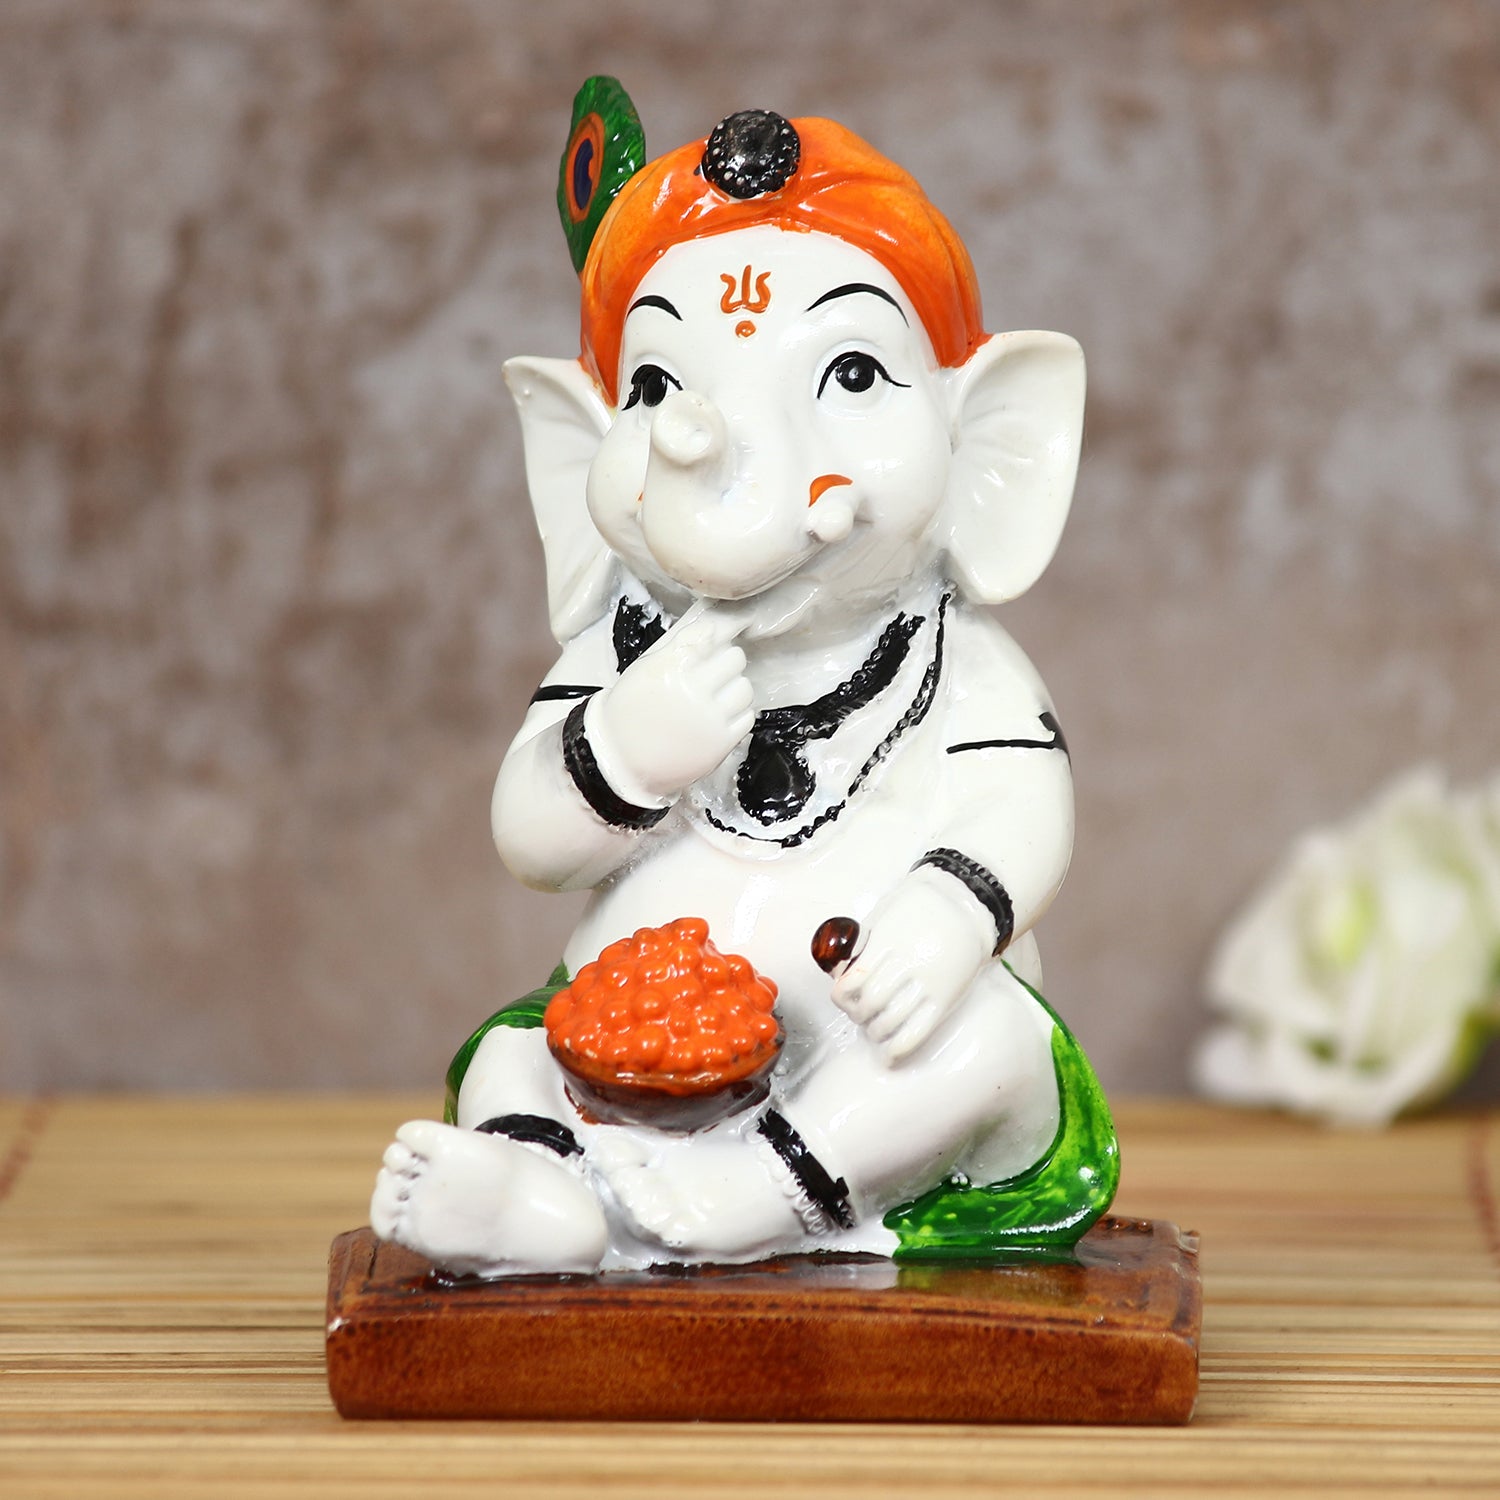 Decorative Polyresin Lord Ganesha Idol eating Ladoo in Lord Krishna Avatar (White, Orange, Green) 1